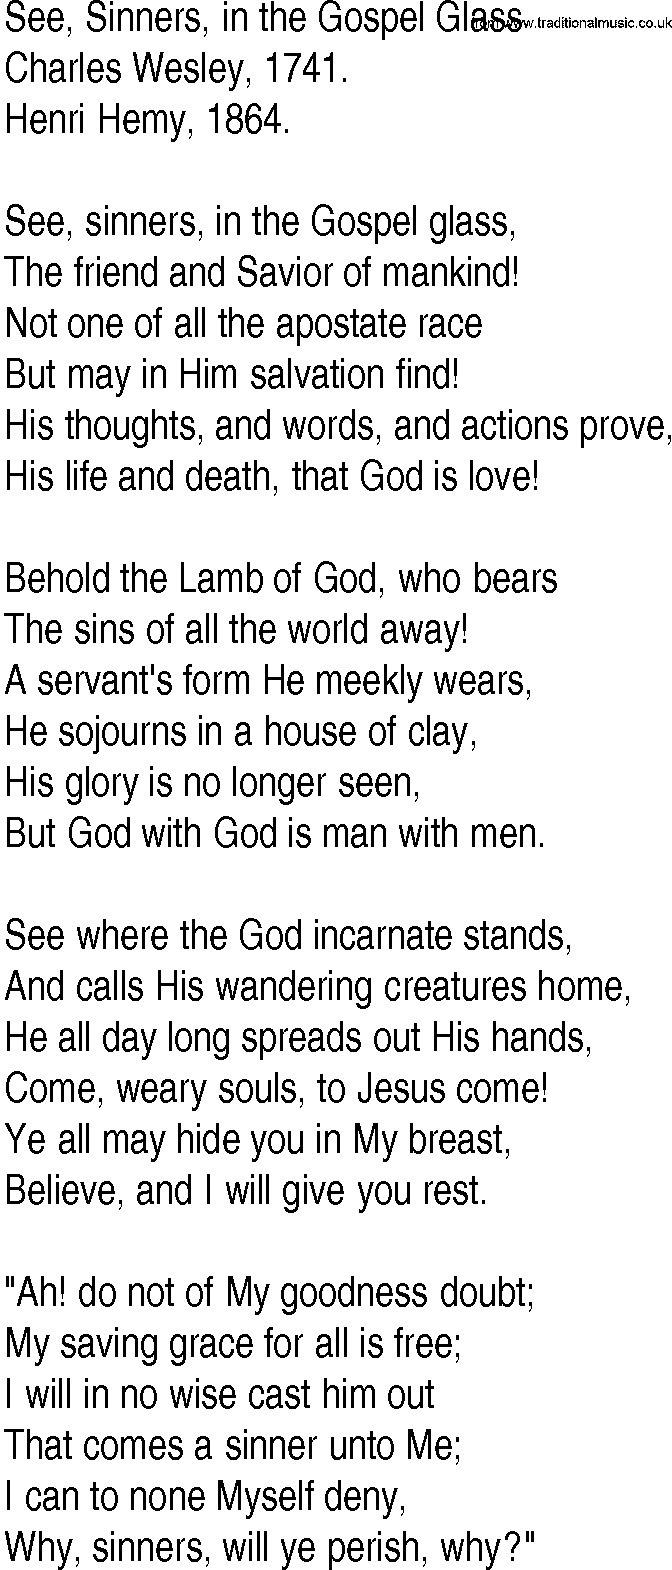 Hymn and Gospel Song: See, Sinners, in the Gospel Glass by Charles Wesley lyrics